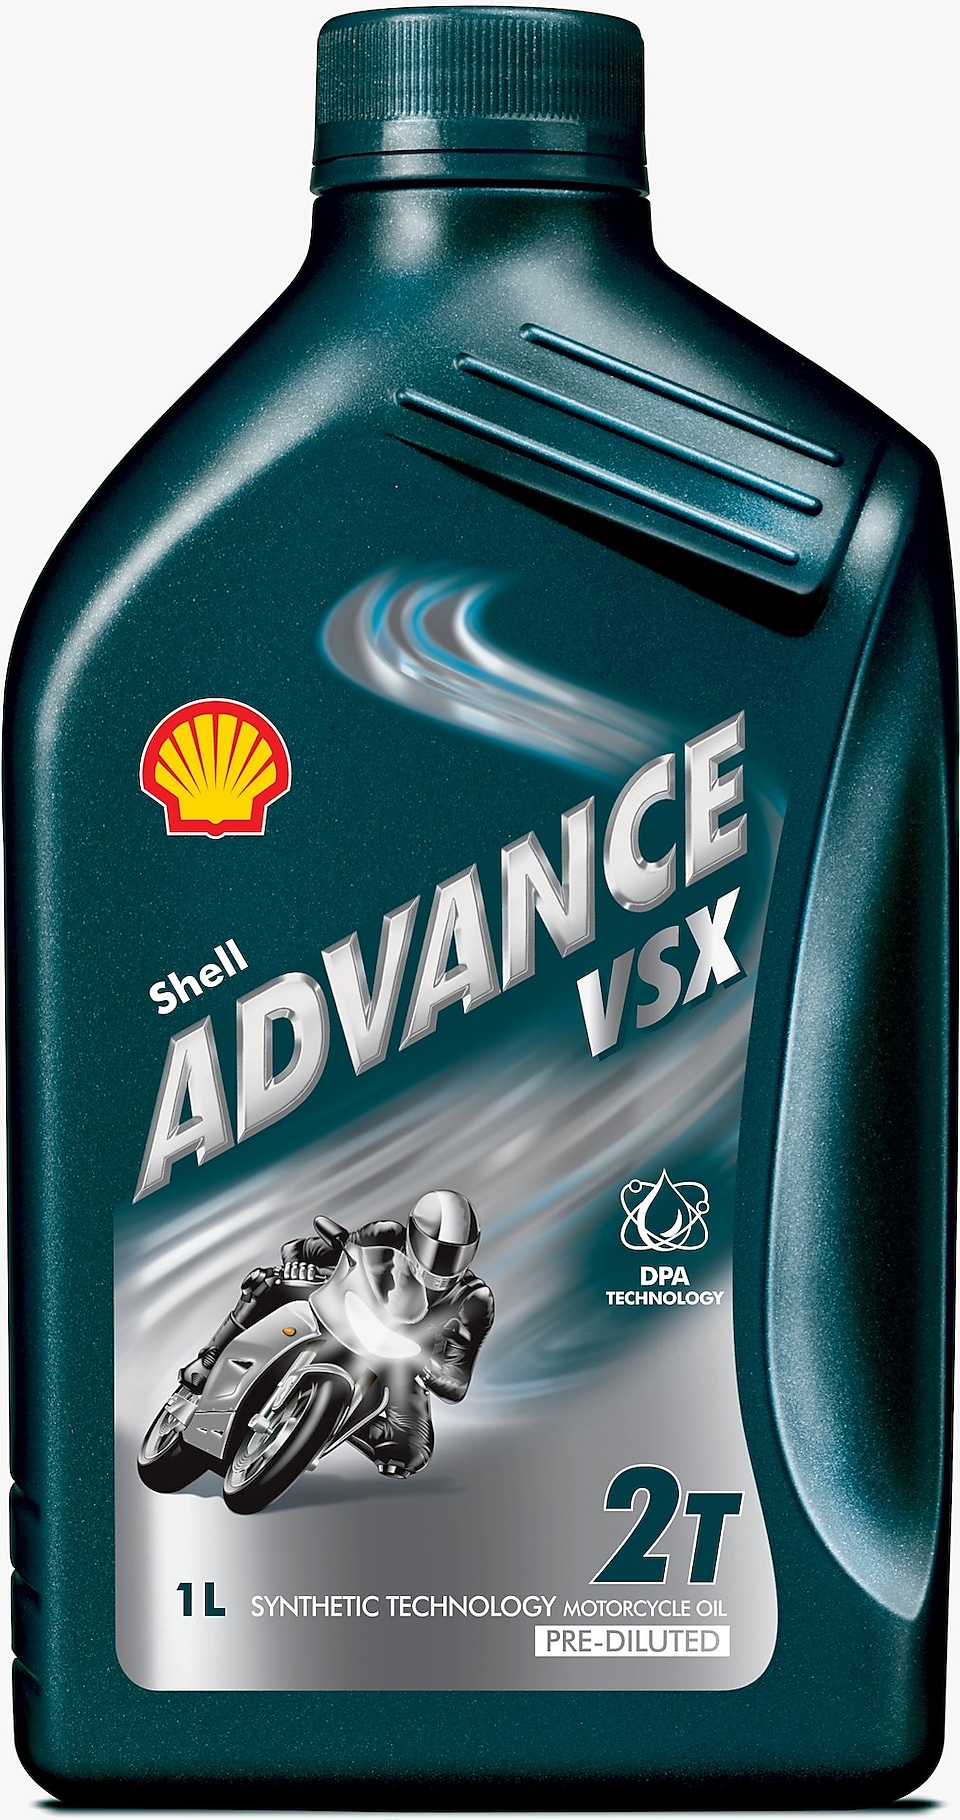 Foto del envase de Shell Advance VSX 2